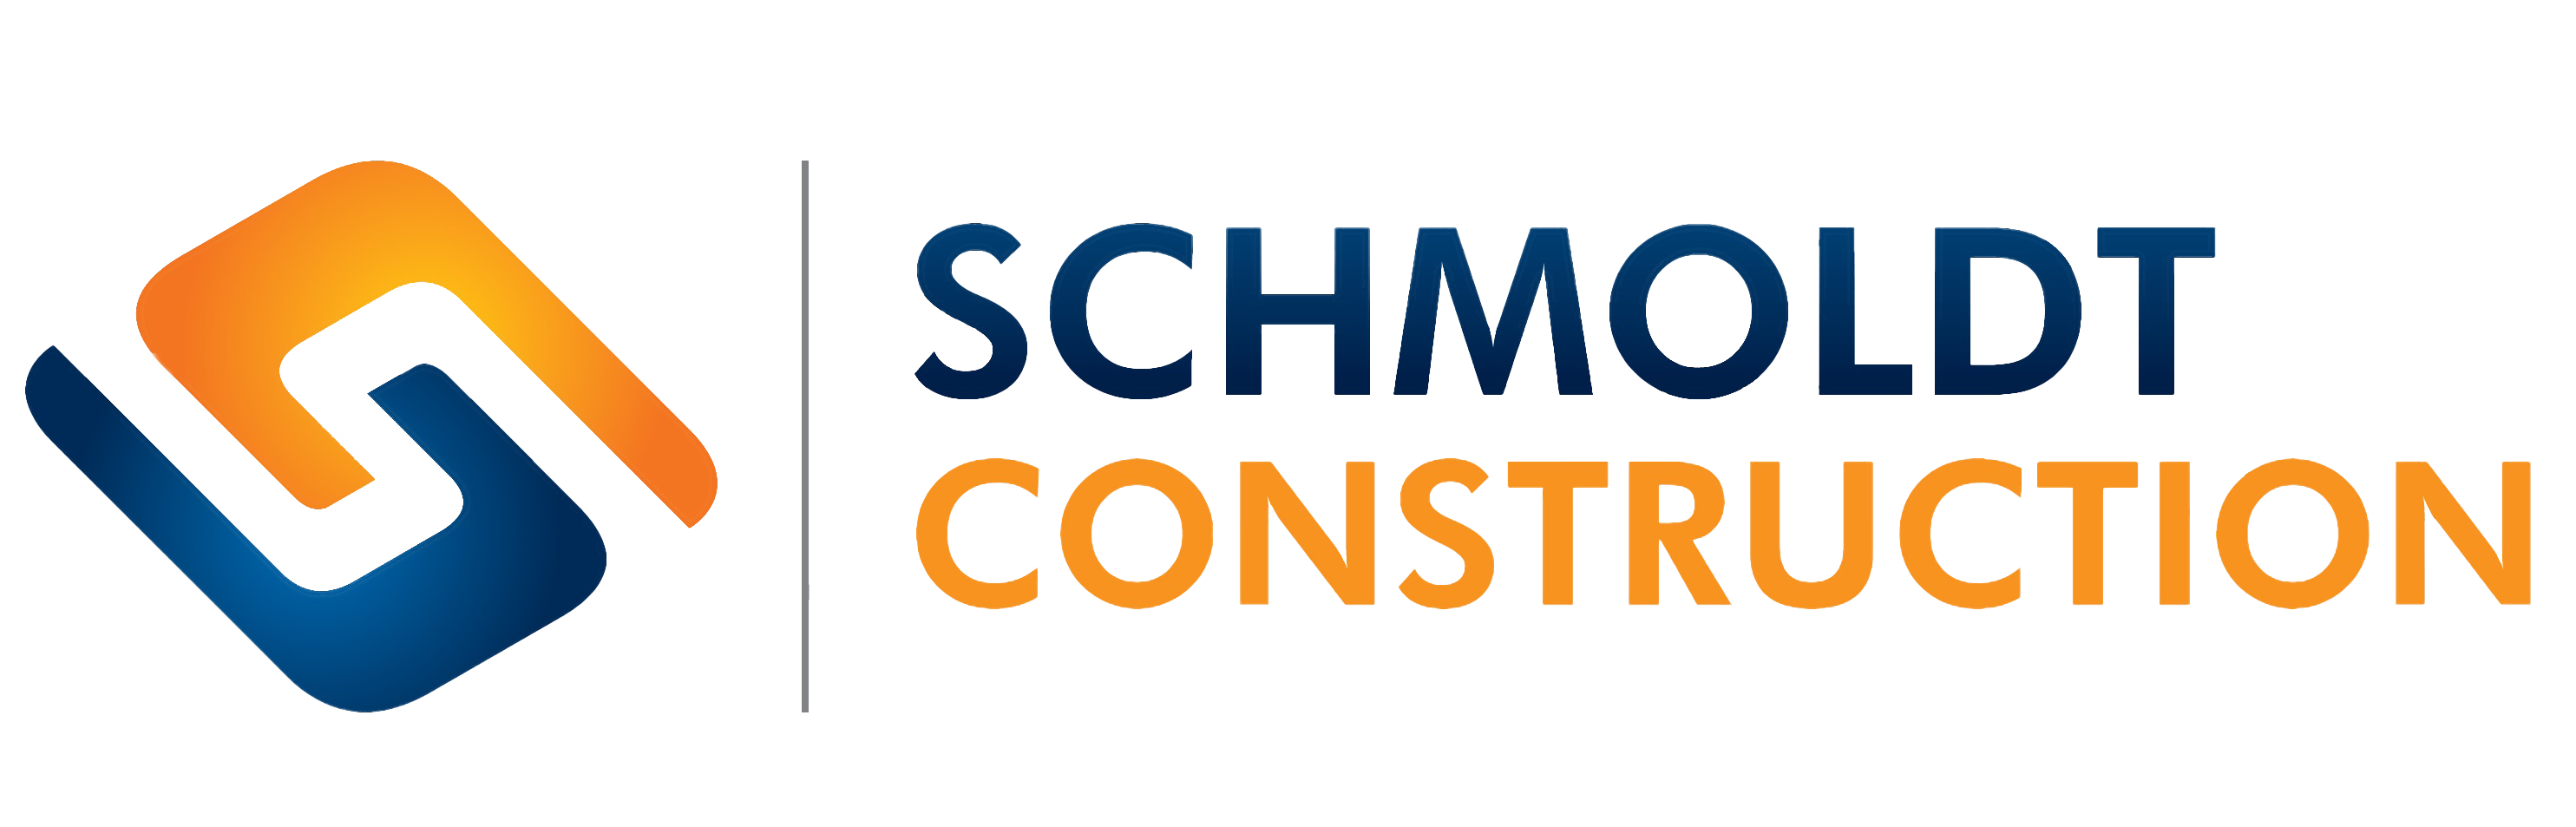 Schmoldt Construction